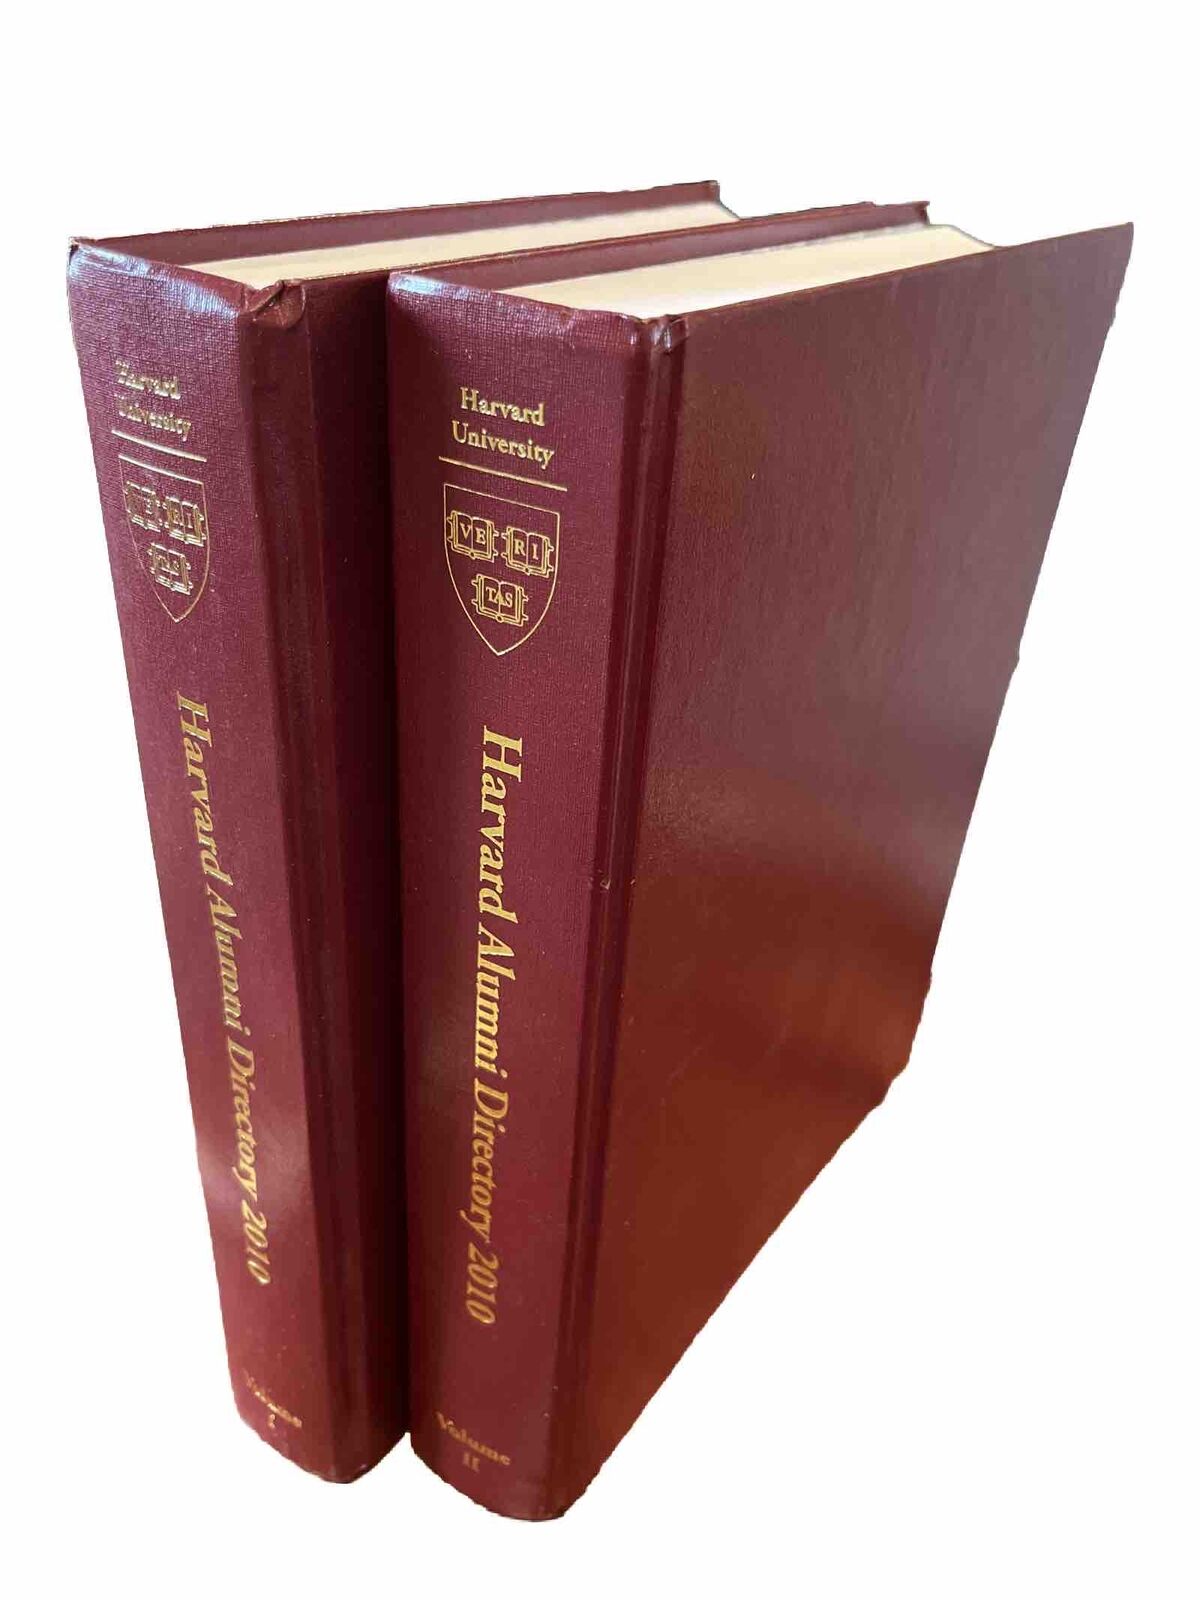 Harvard University Alumni Directory 2010 - Complete with Volumes I and II